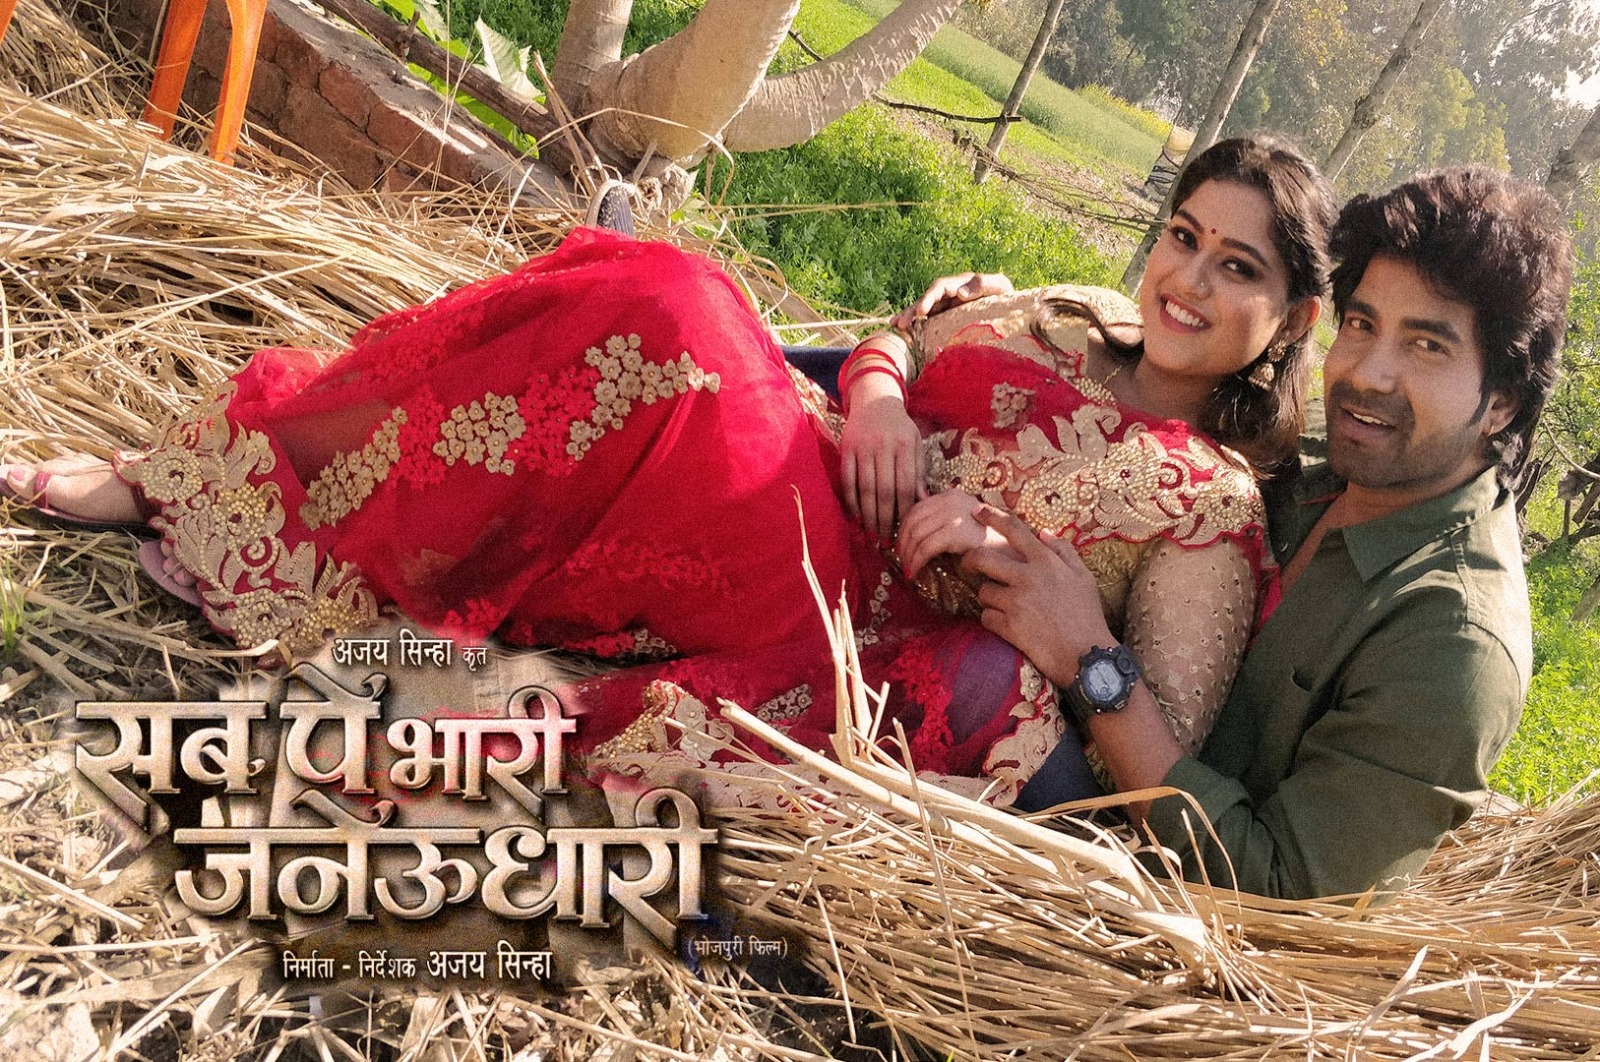 Bhojpuri film 'Sab Pe Bhari Janeudhari' released, the film is getting a lot of appreciation